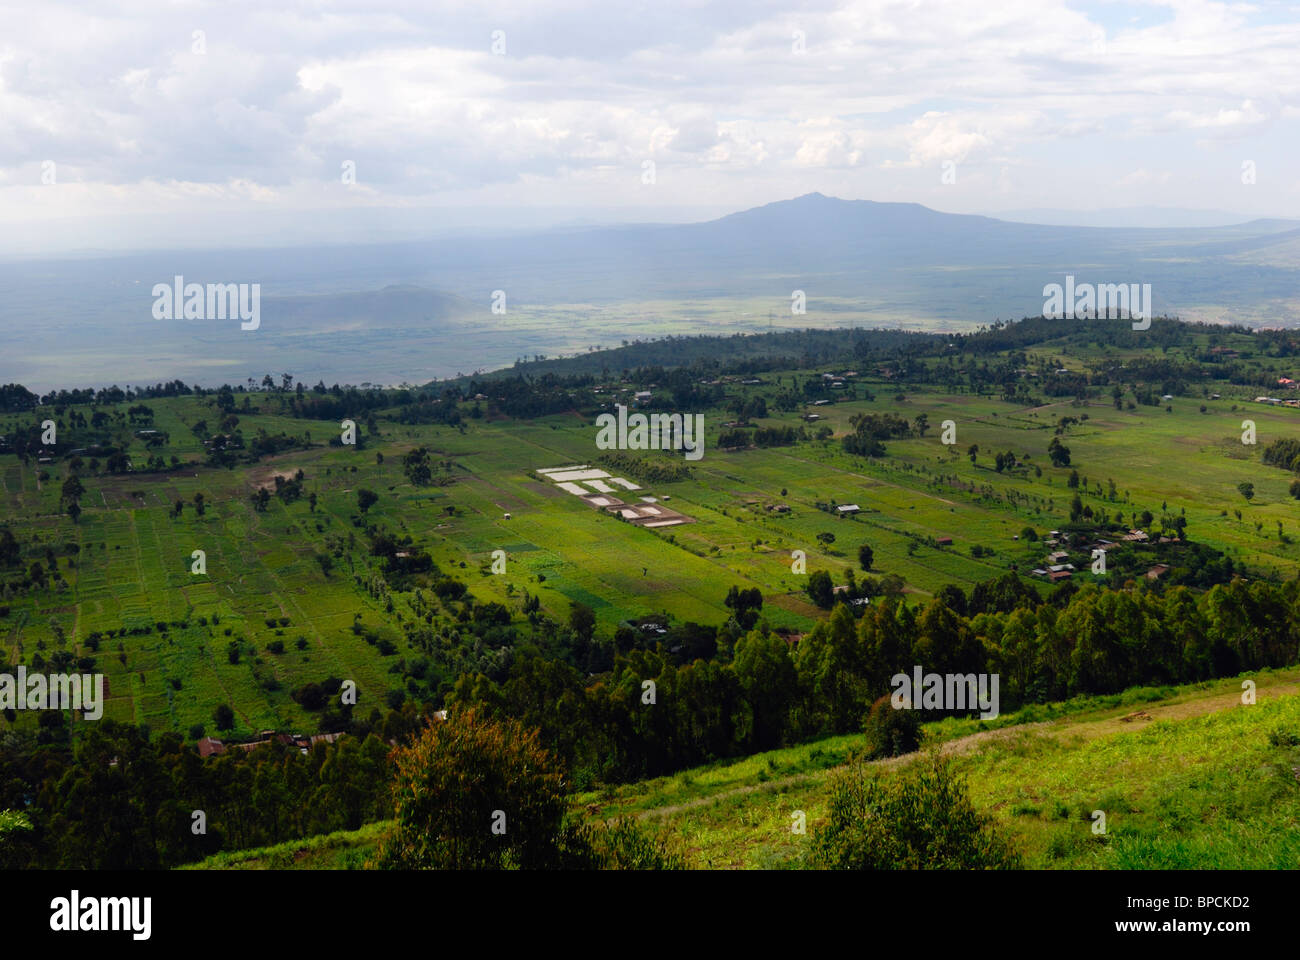 Great Rift Valley, Kenya, looking west Stock Photo